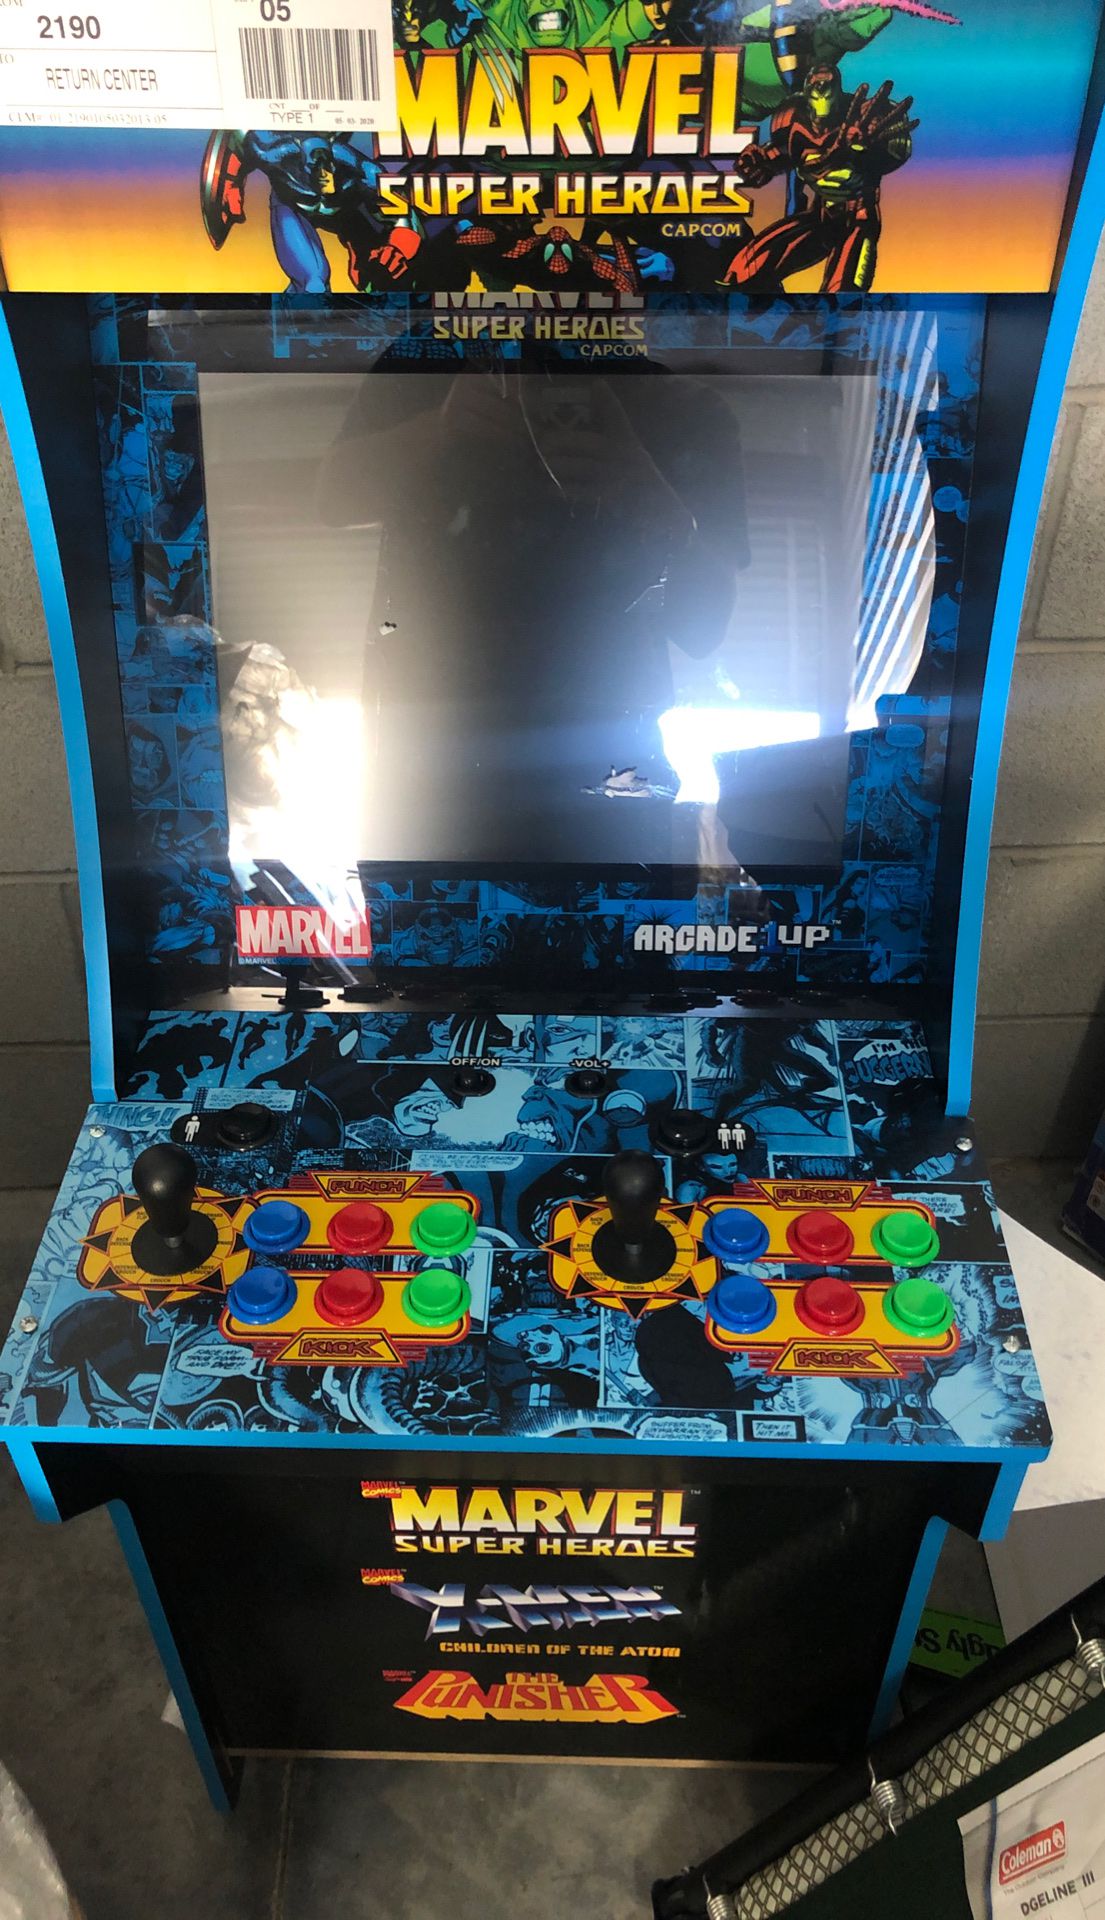 Marvel super hero’s arcade game